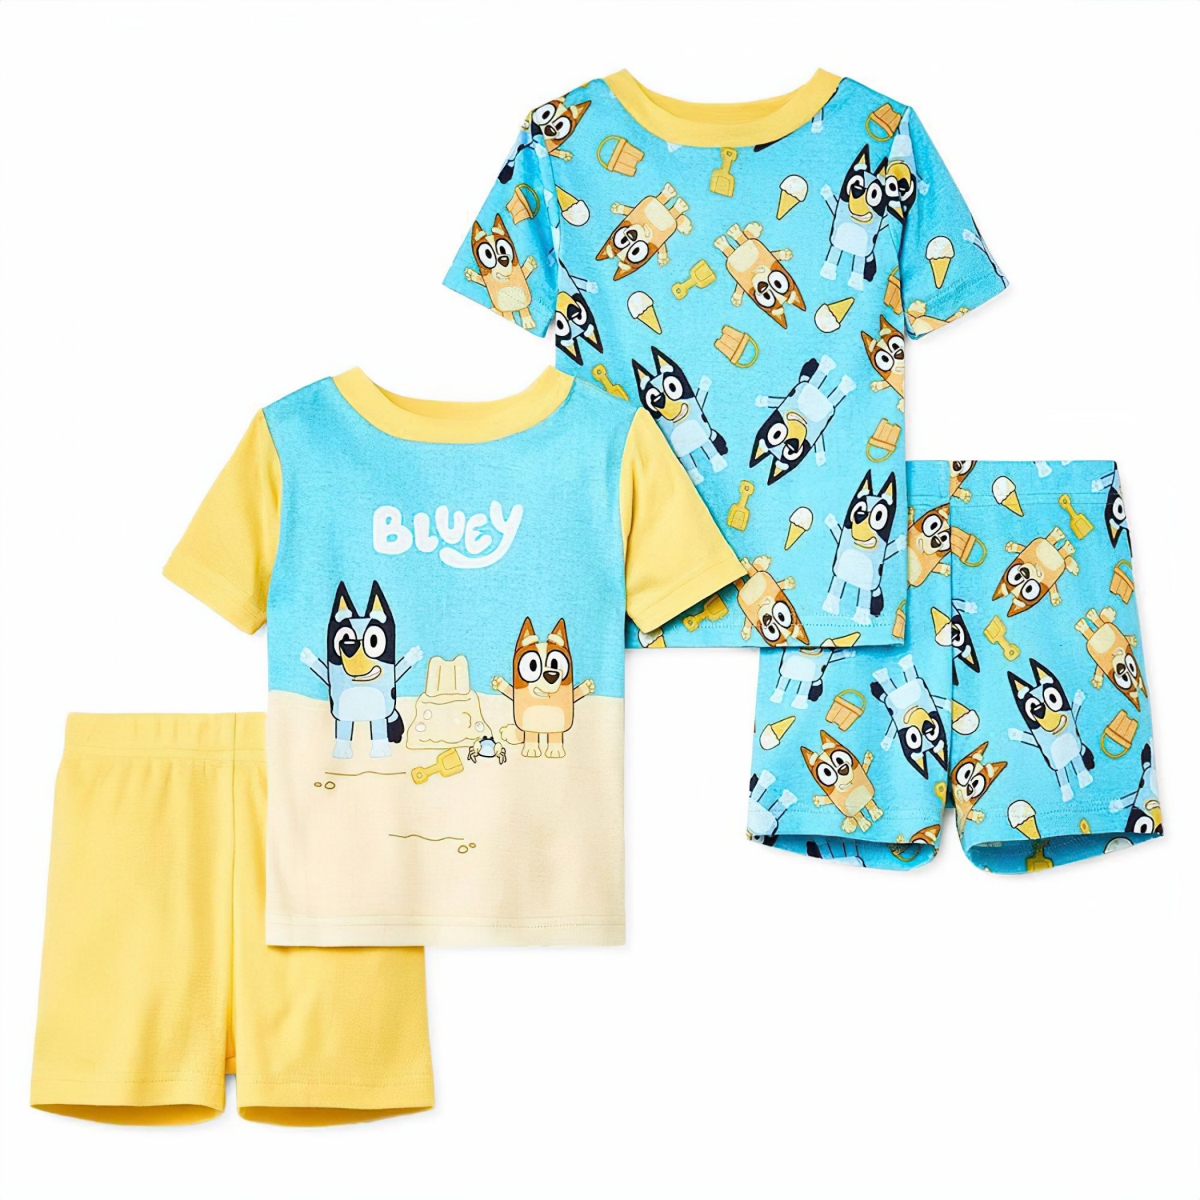 Picture of Bluey 873075-toddler3t Bluey Sand Castles Toddler Pajama Set - Toddler 3T - 4 Piece